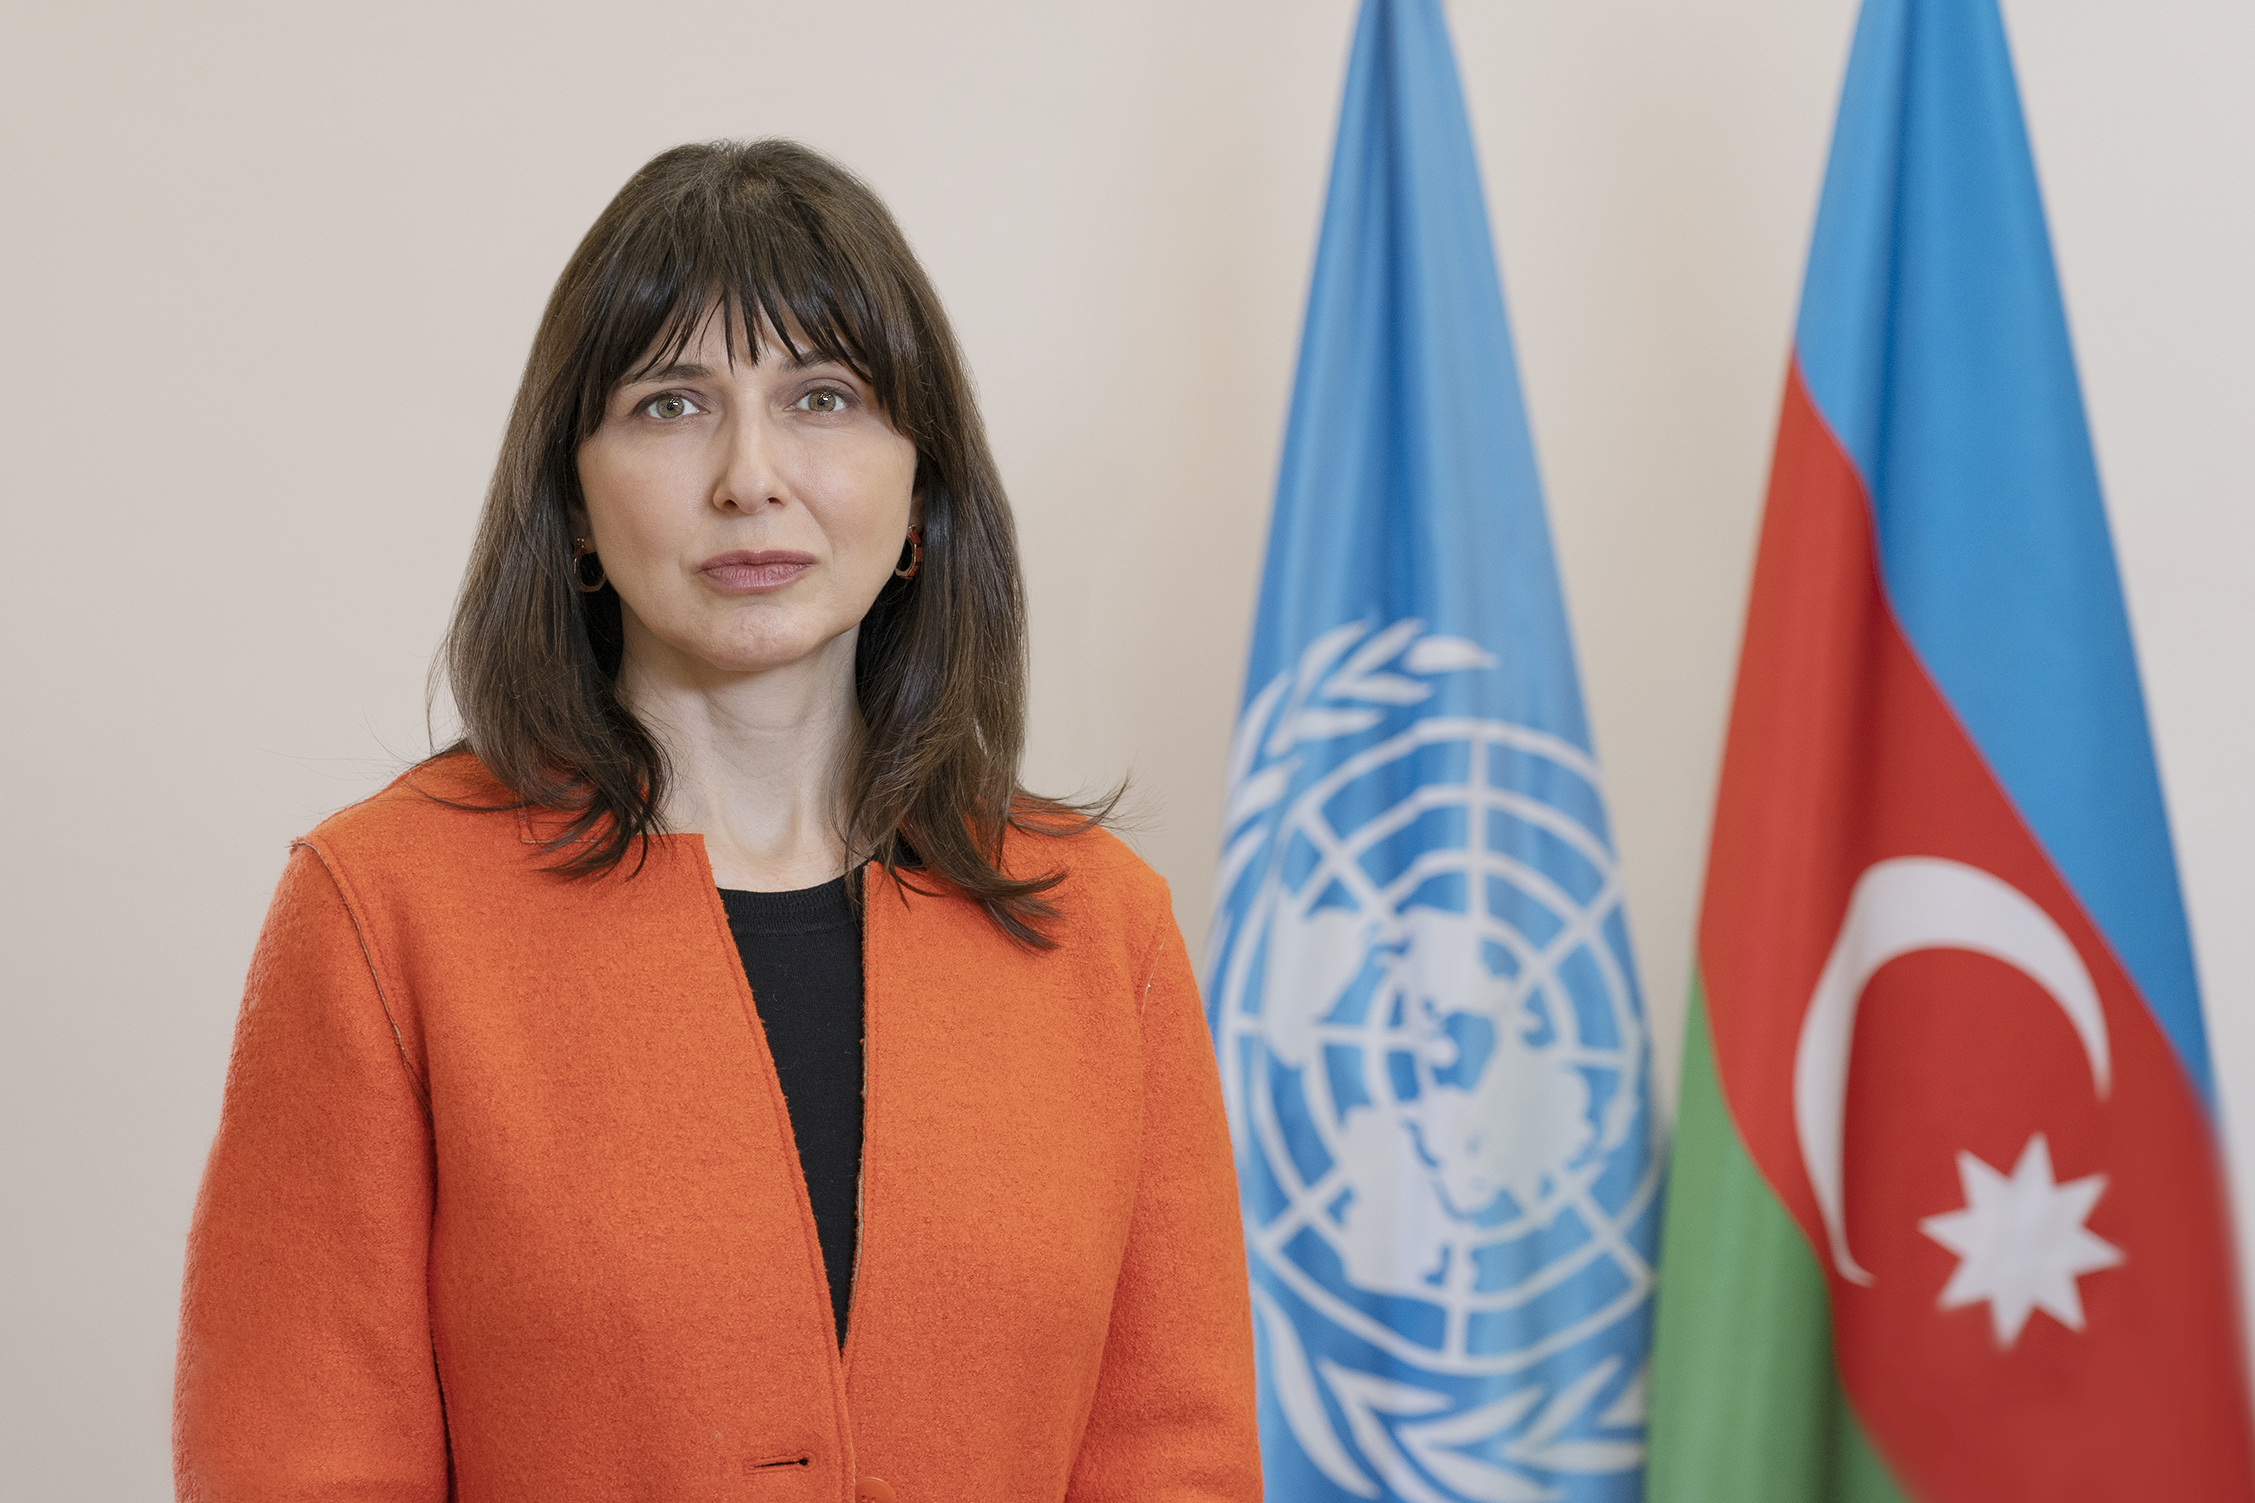 UN-Azerbaijan: Celebrating 30 years of partnership